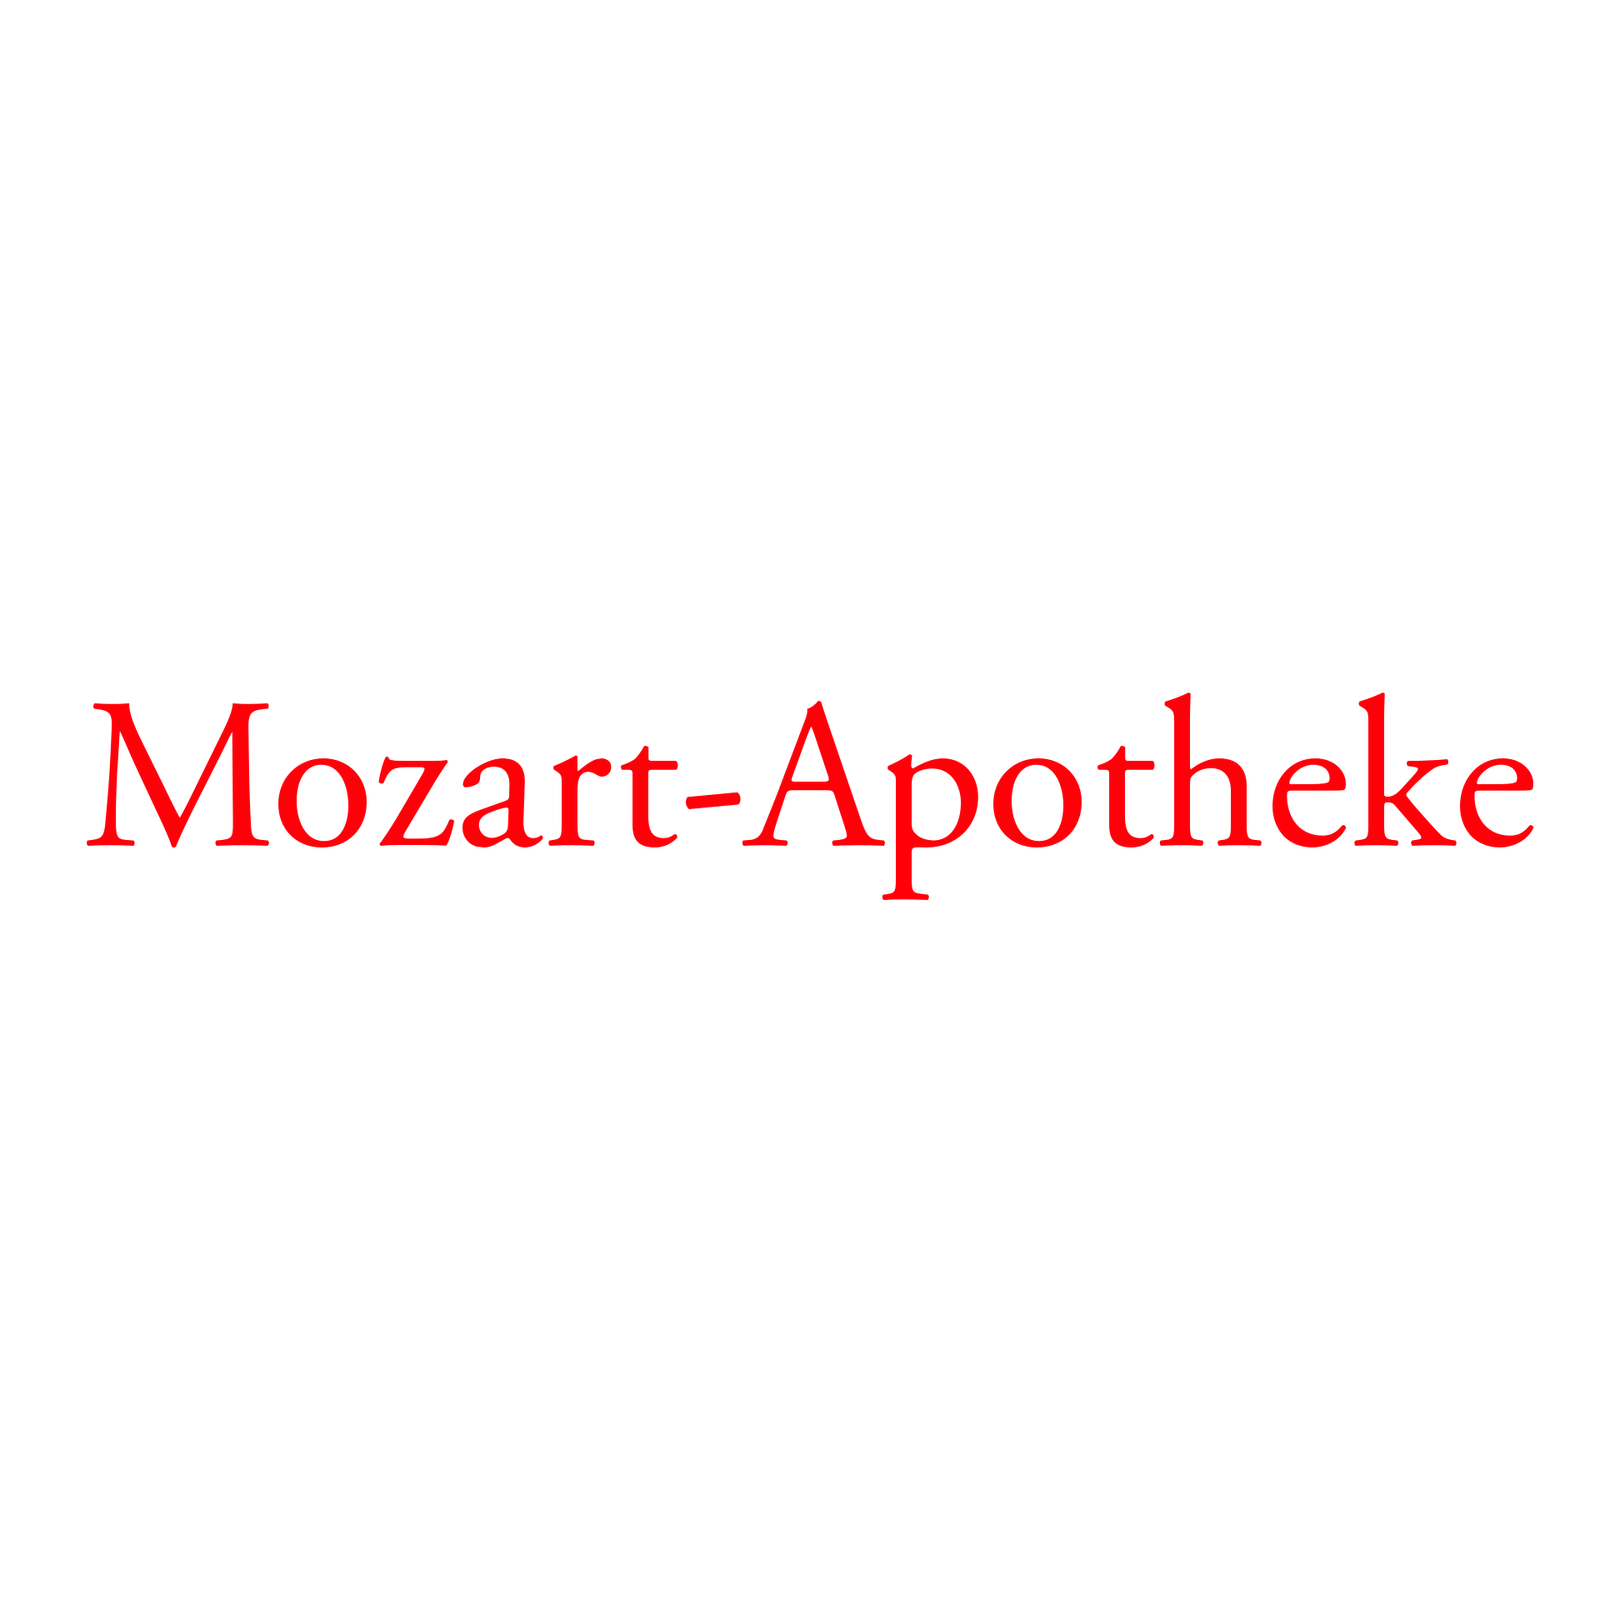 Mozart-Apotheke in Leipzig - Logo